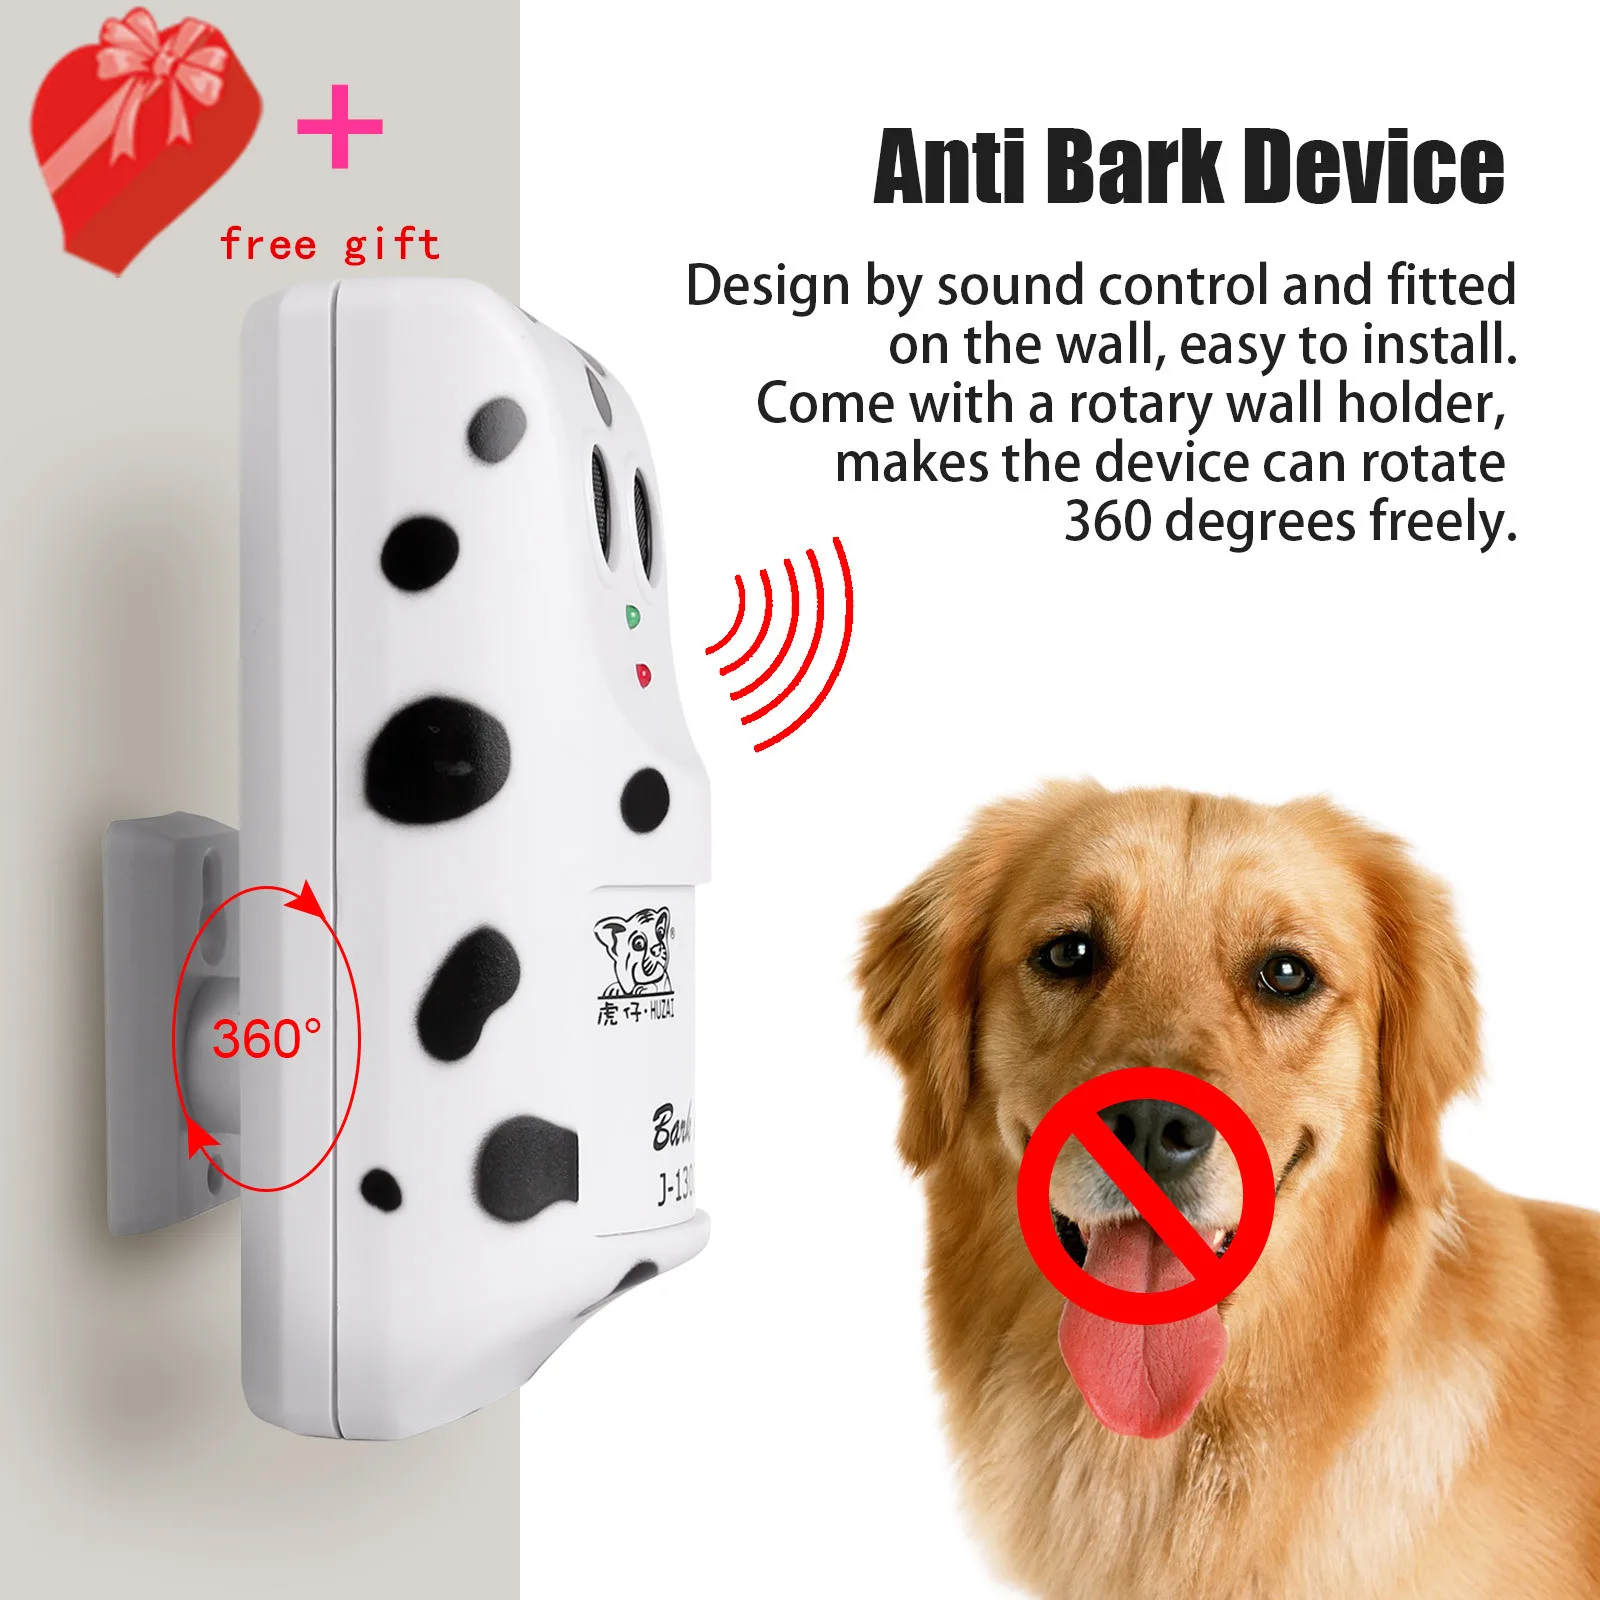 

Pet Dog Repeller Dog Anti Bark Training Device Ultrasonic Dog Repeller Equipment Dog Anit Barking Training Clicker Silencer Tool